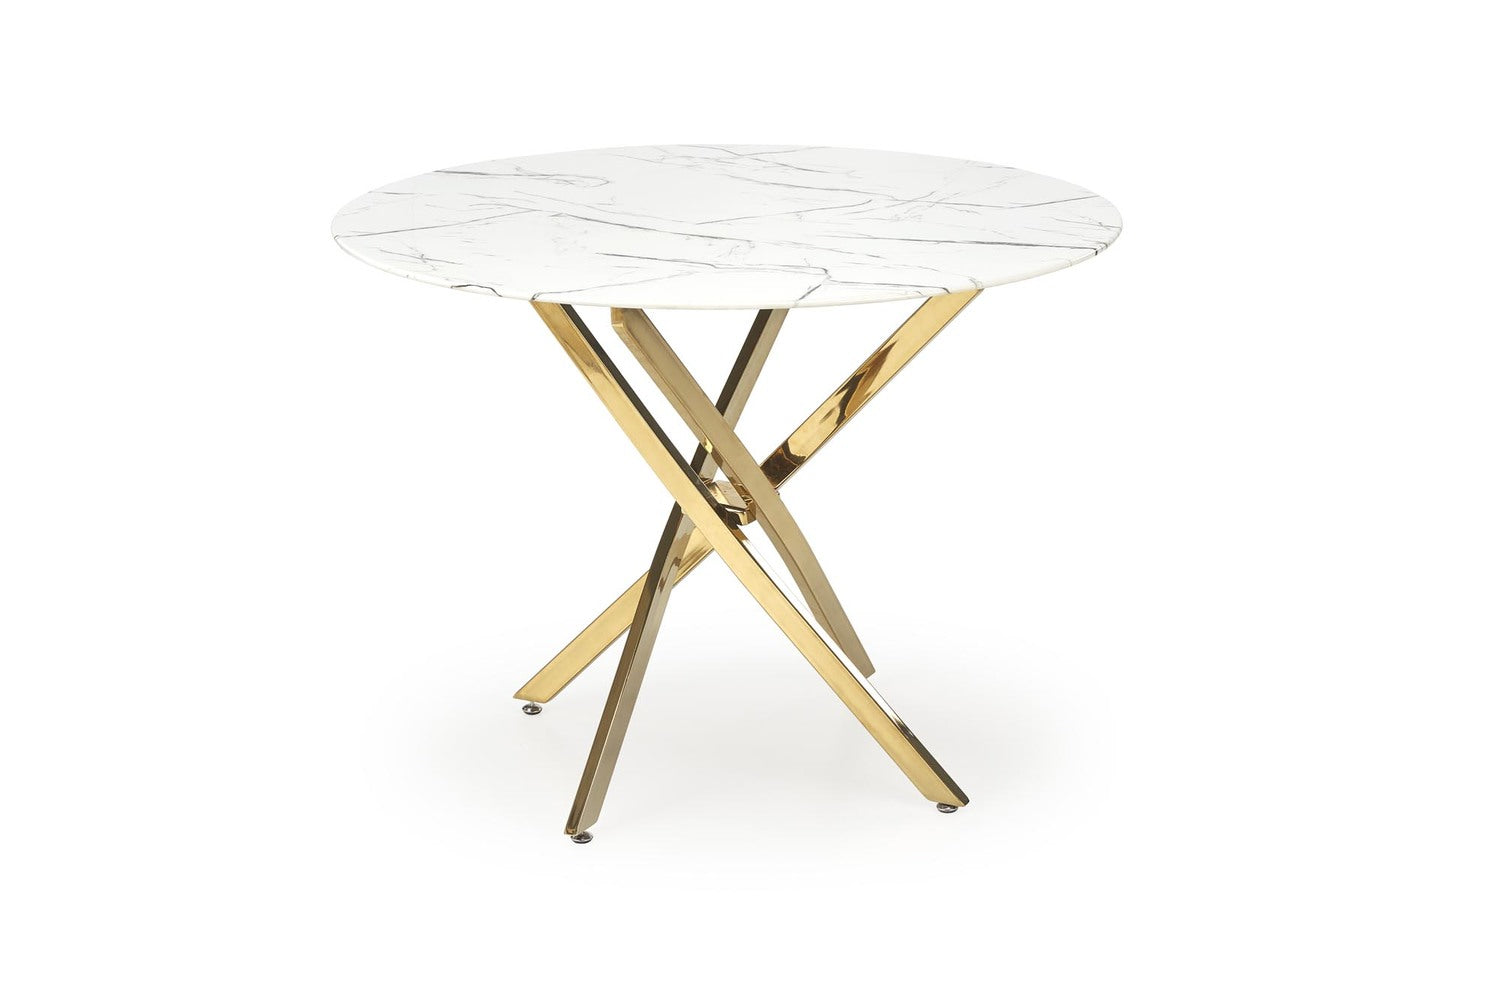 RM 2 galds, augsts - balts marmors, kājas - zelts